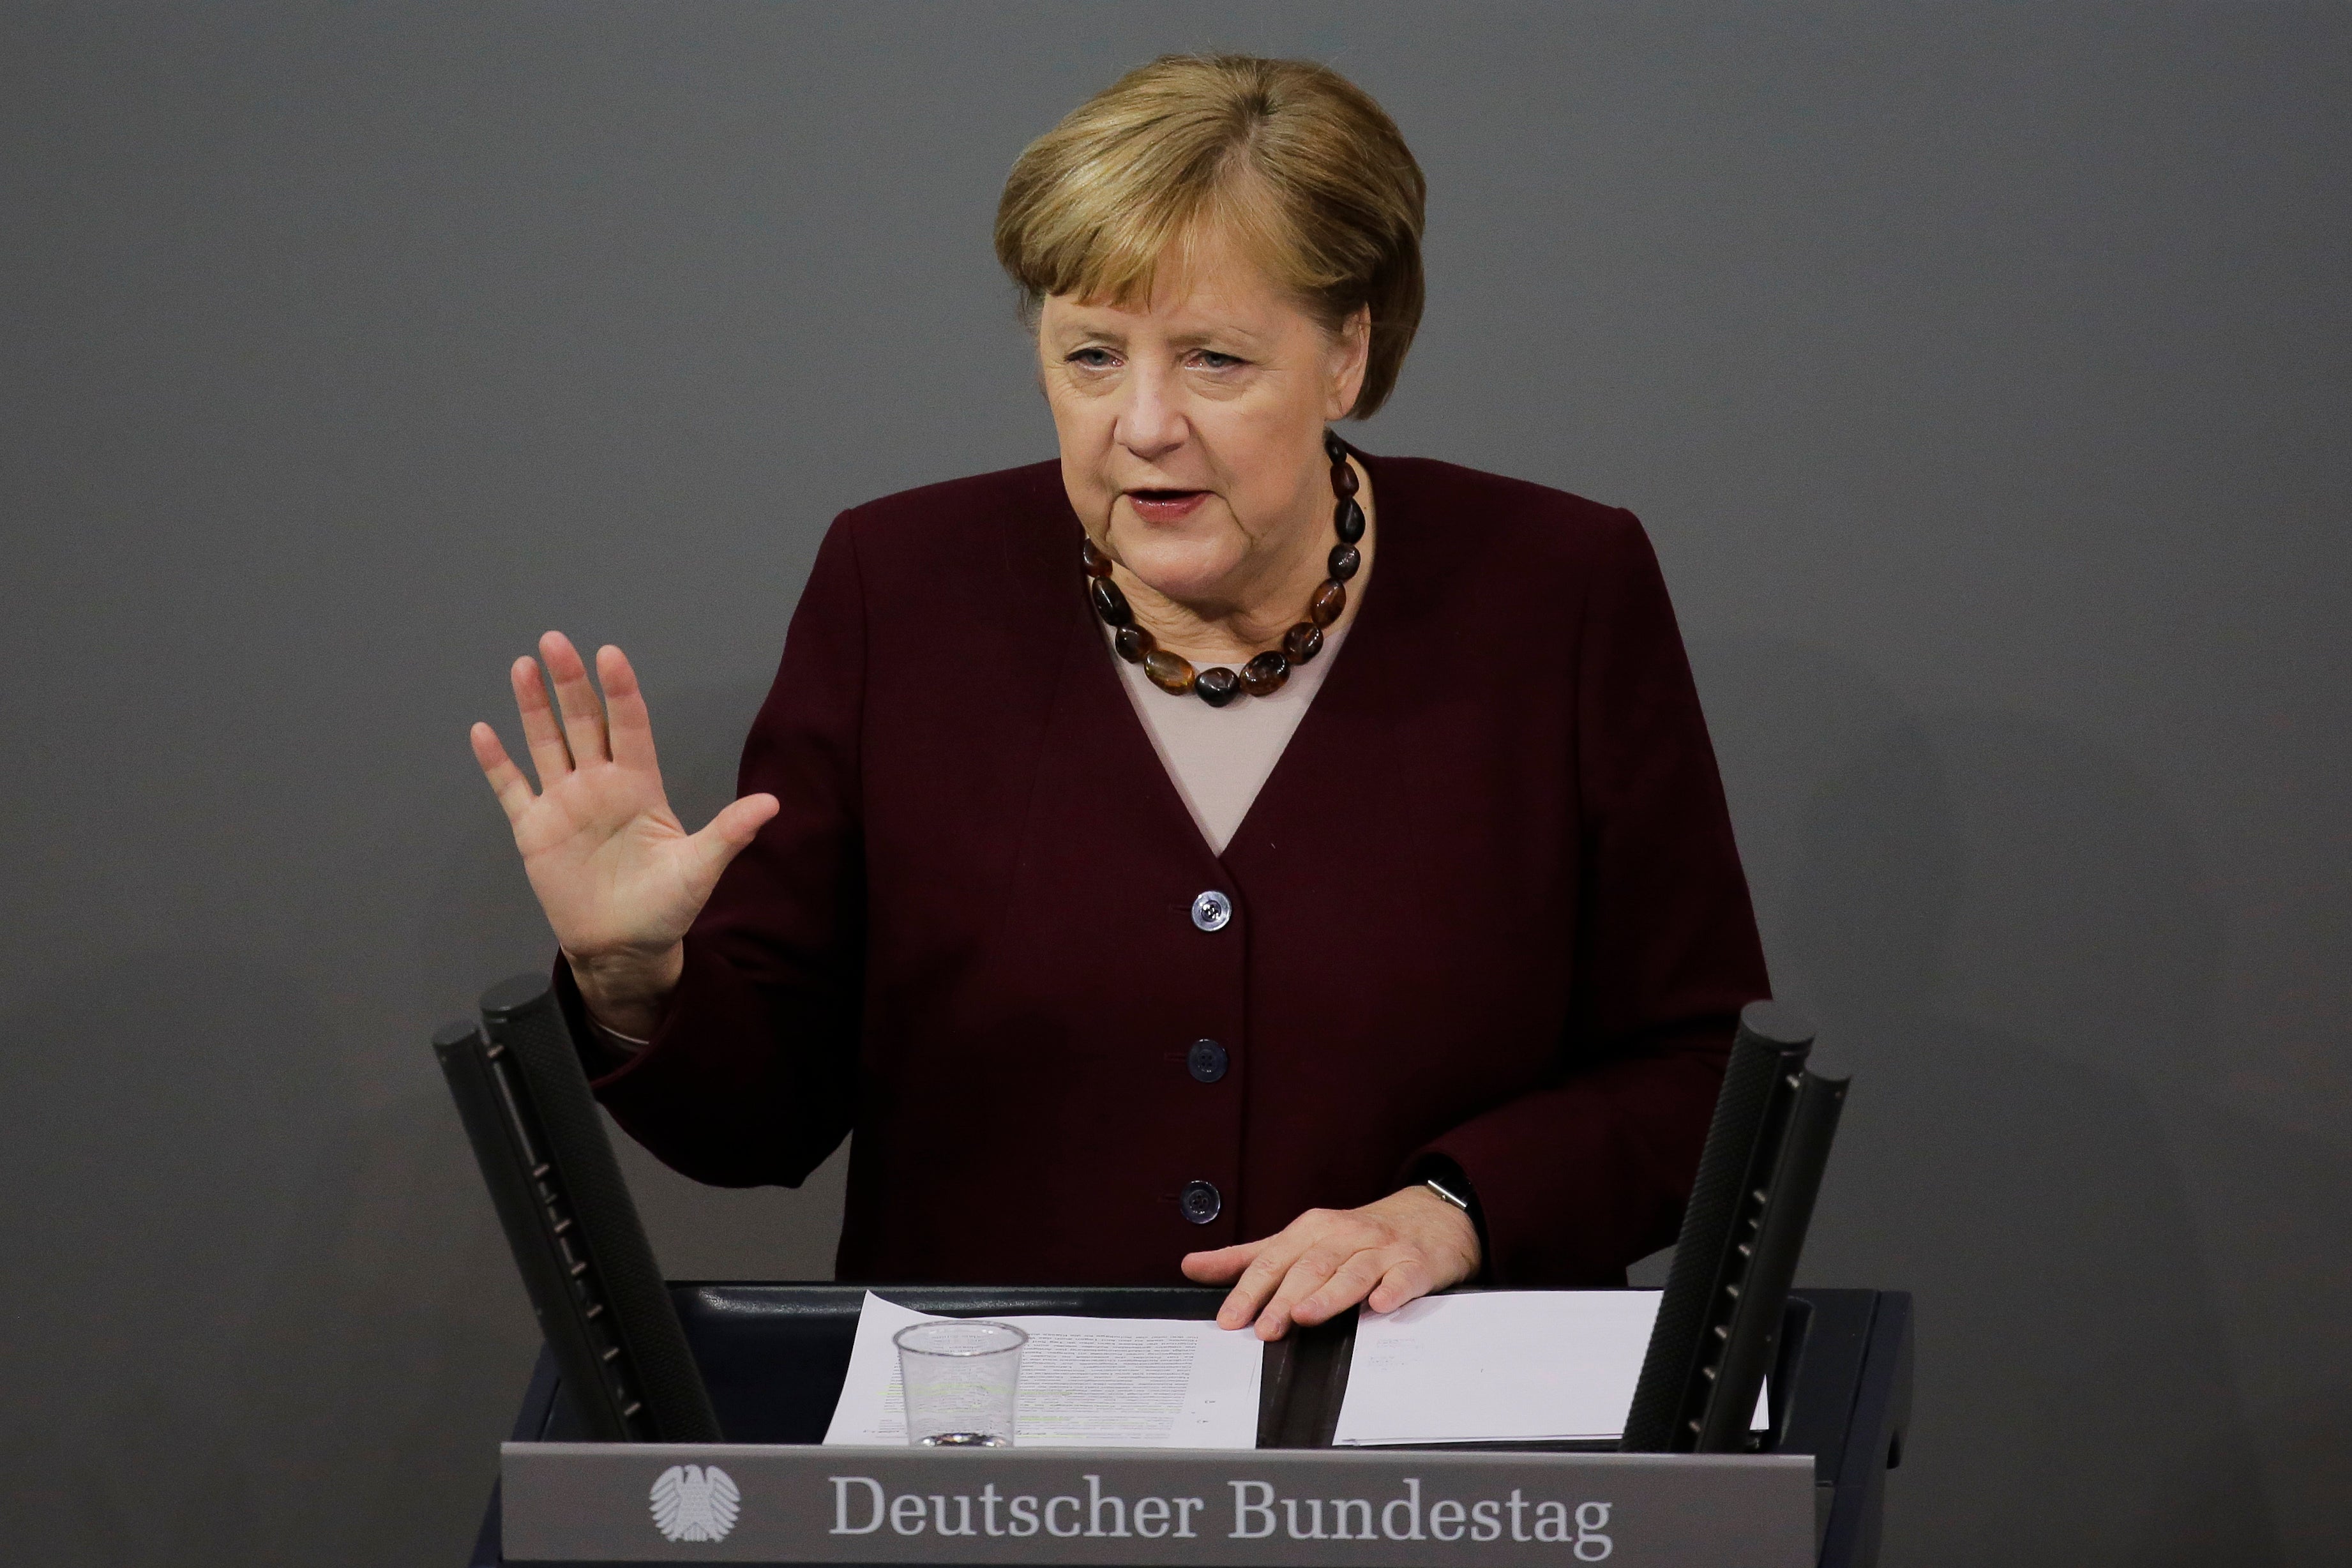 Angela Merkel made the rare Brexit intervention on Wednesday